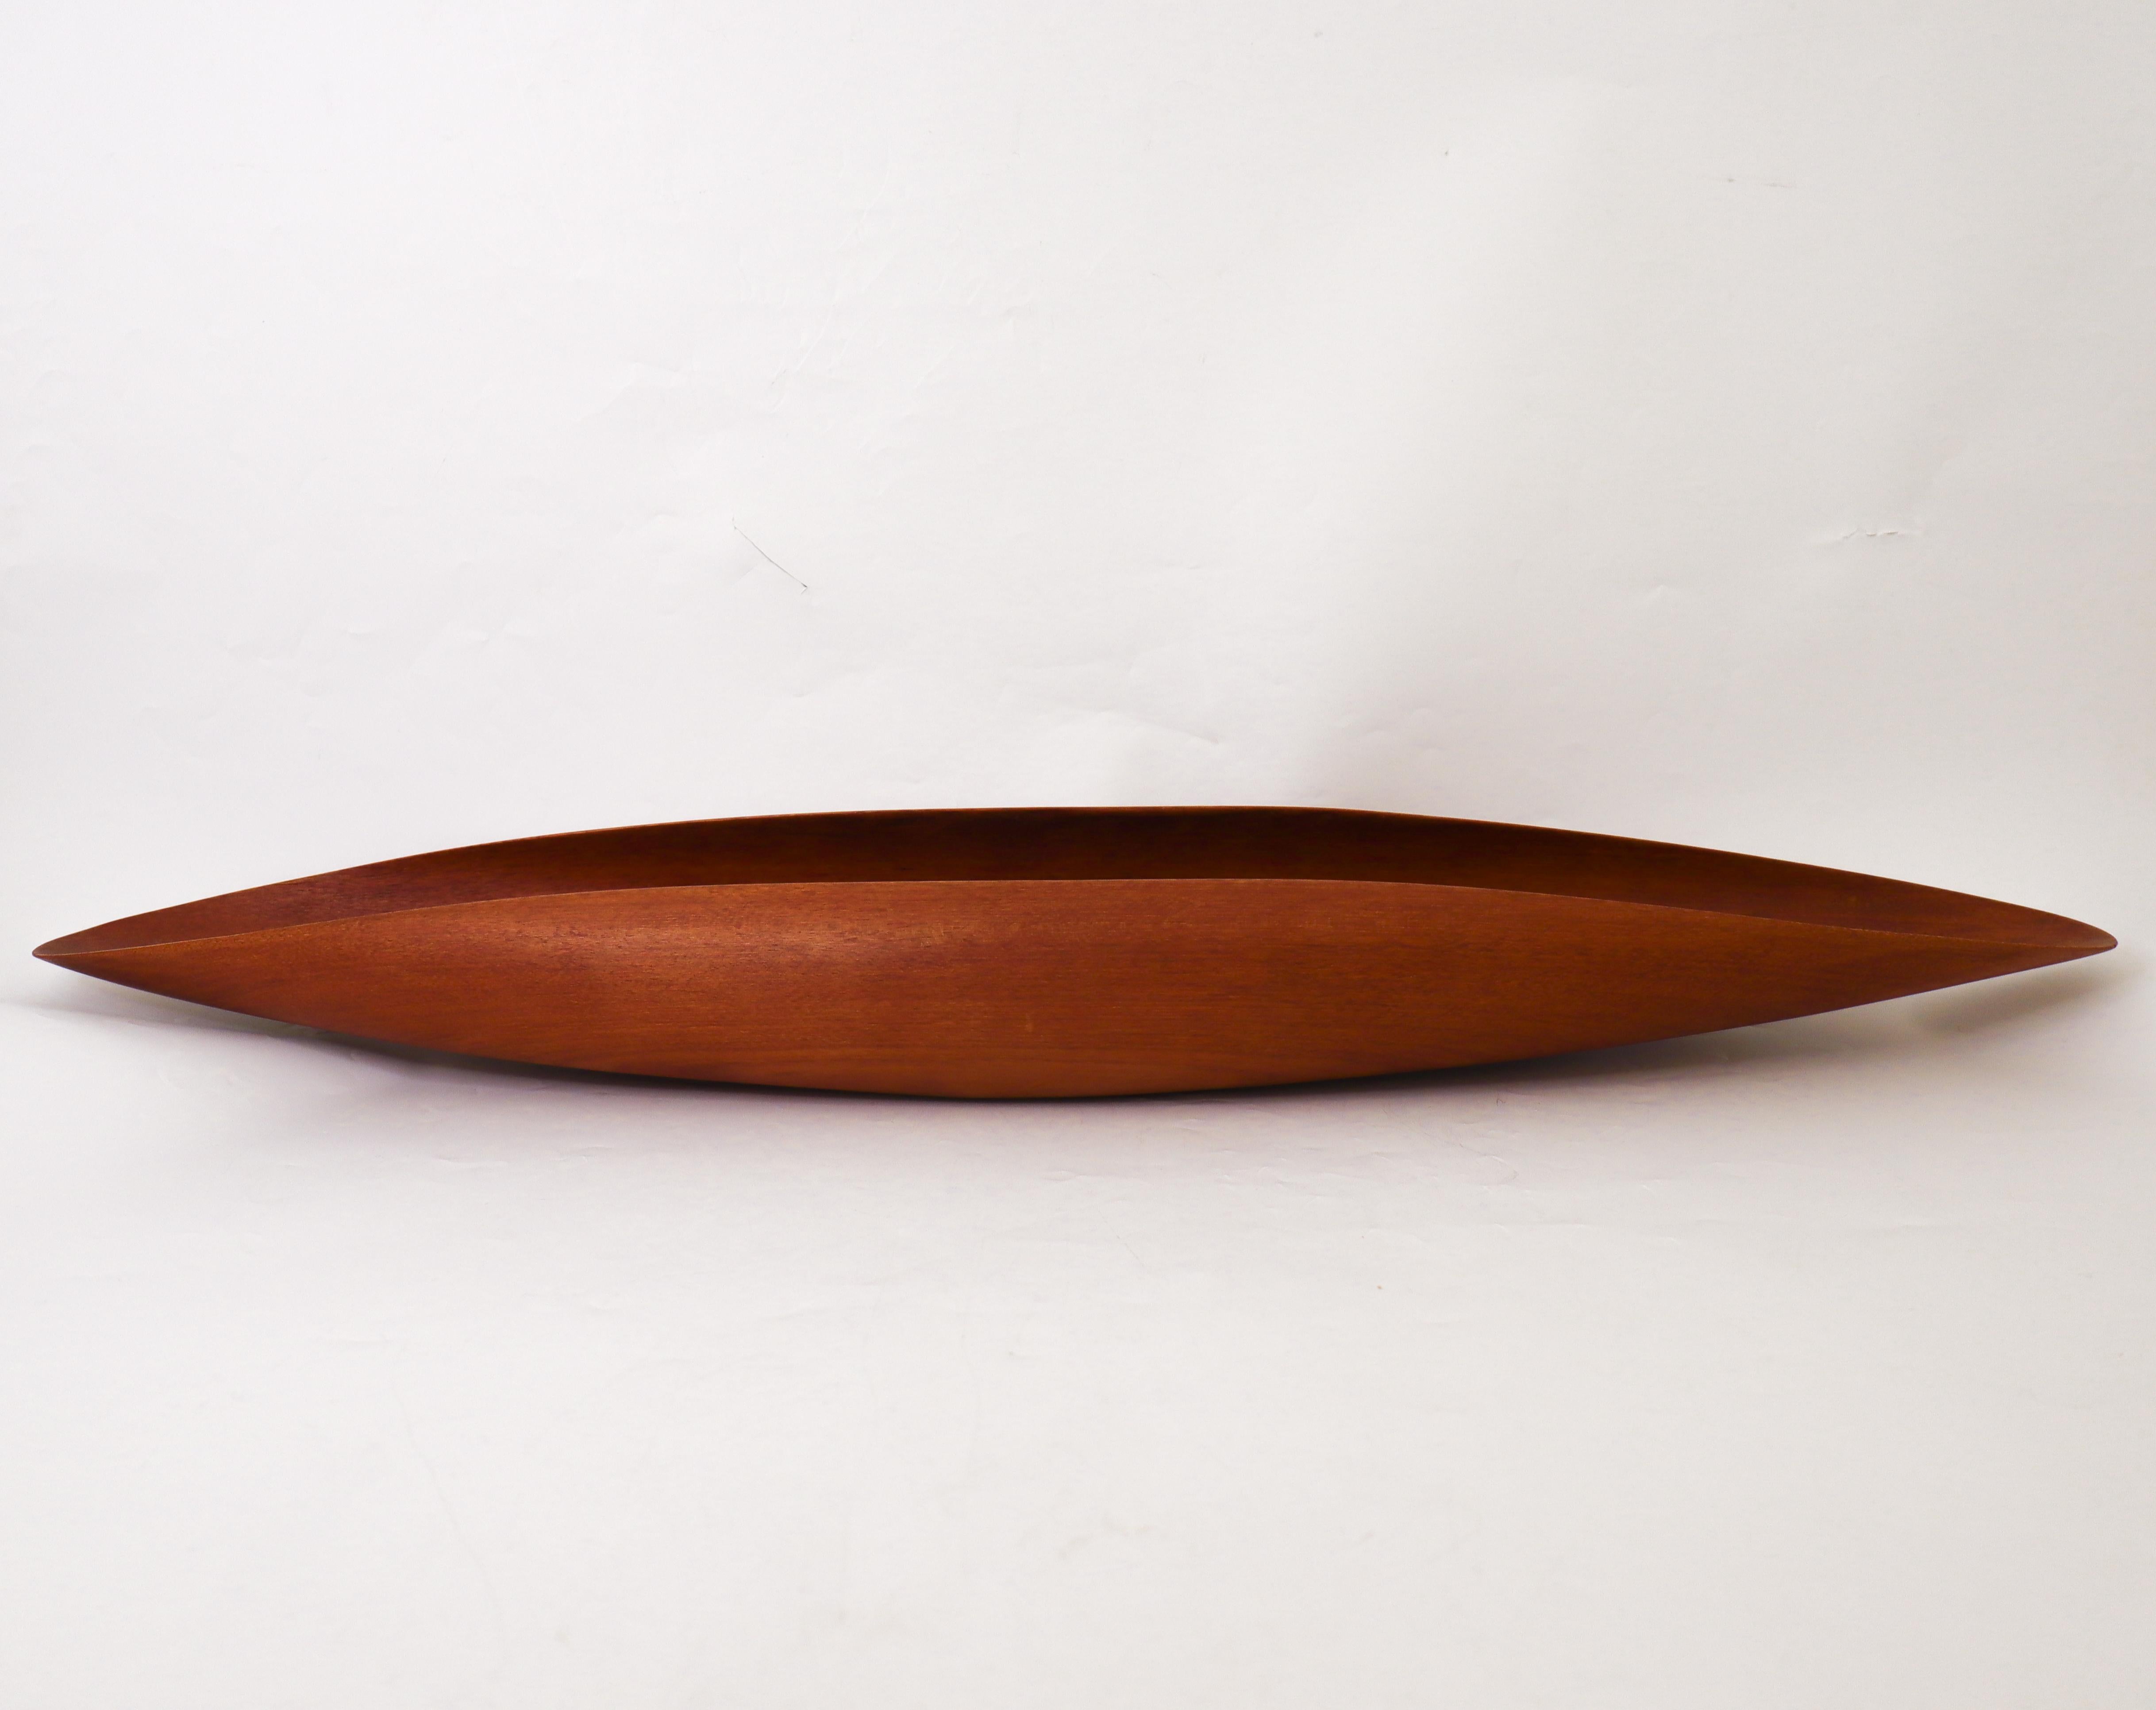 A lovely, large wooden bowl in teak designed by Johnny Mattsson in Gävle, Sweden. The bowl is 70 cm (27,5